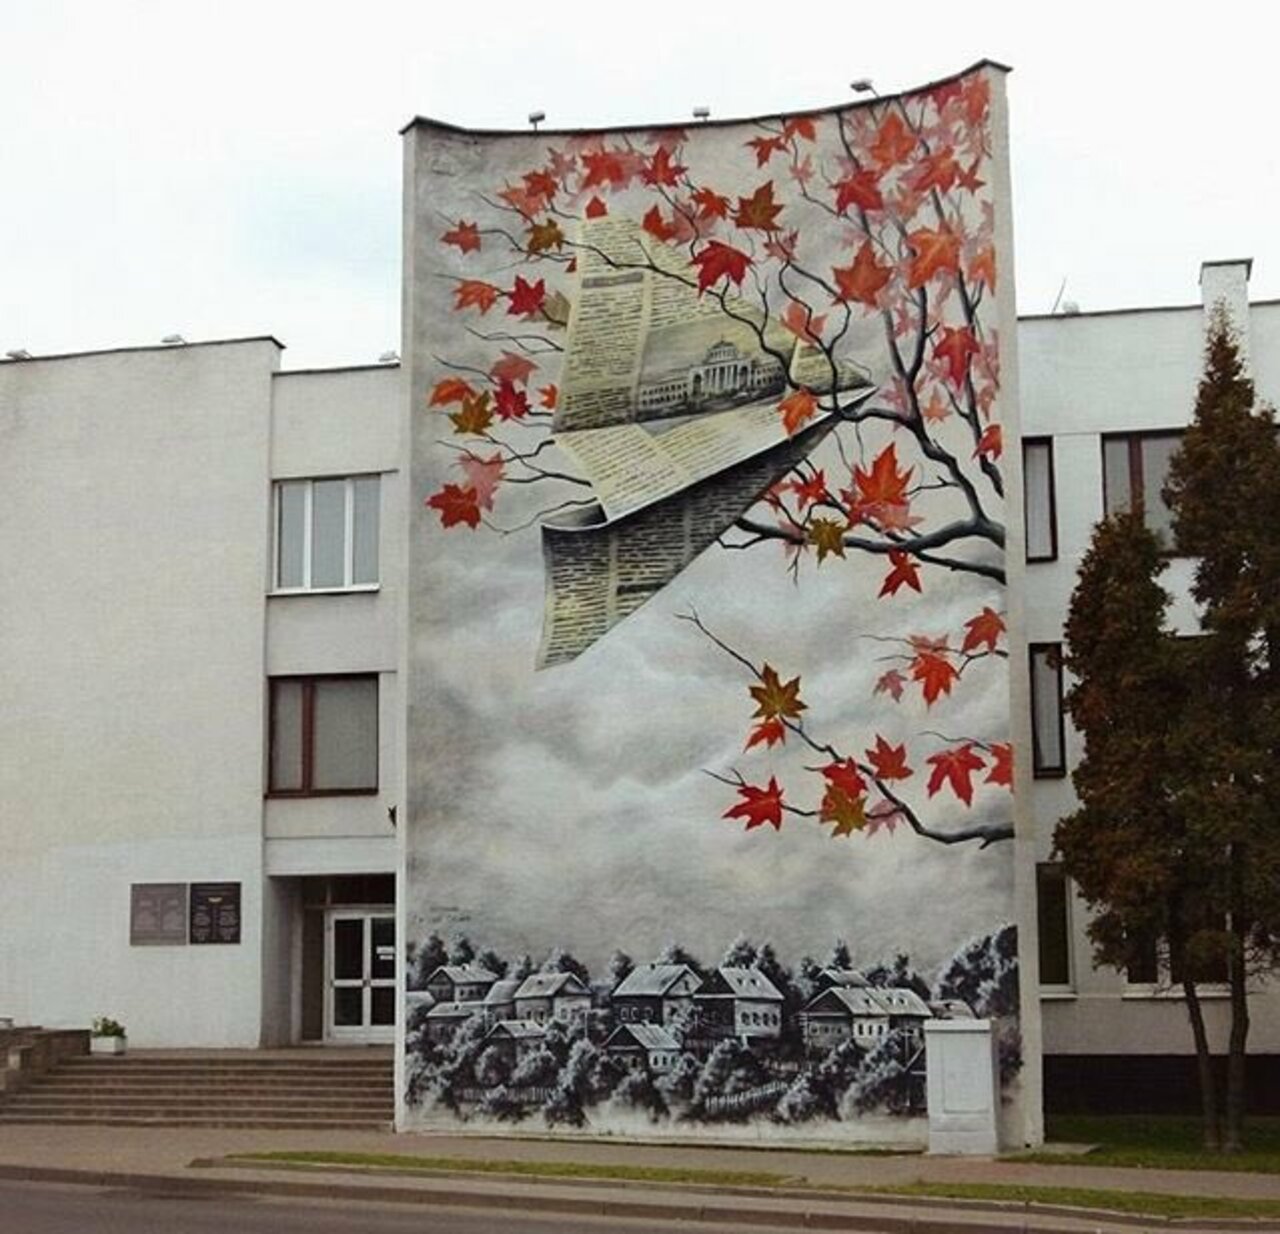 New Street Art by MUTUS in Belarus 

#art #graffiti #mural #streetart https://t.co/LPlSv7eHt9